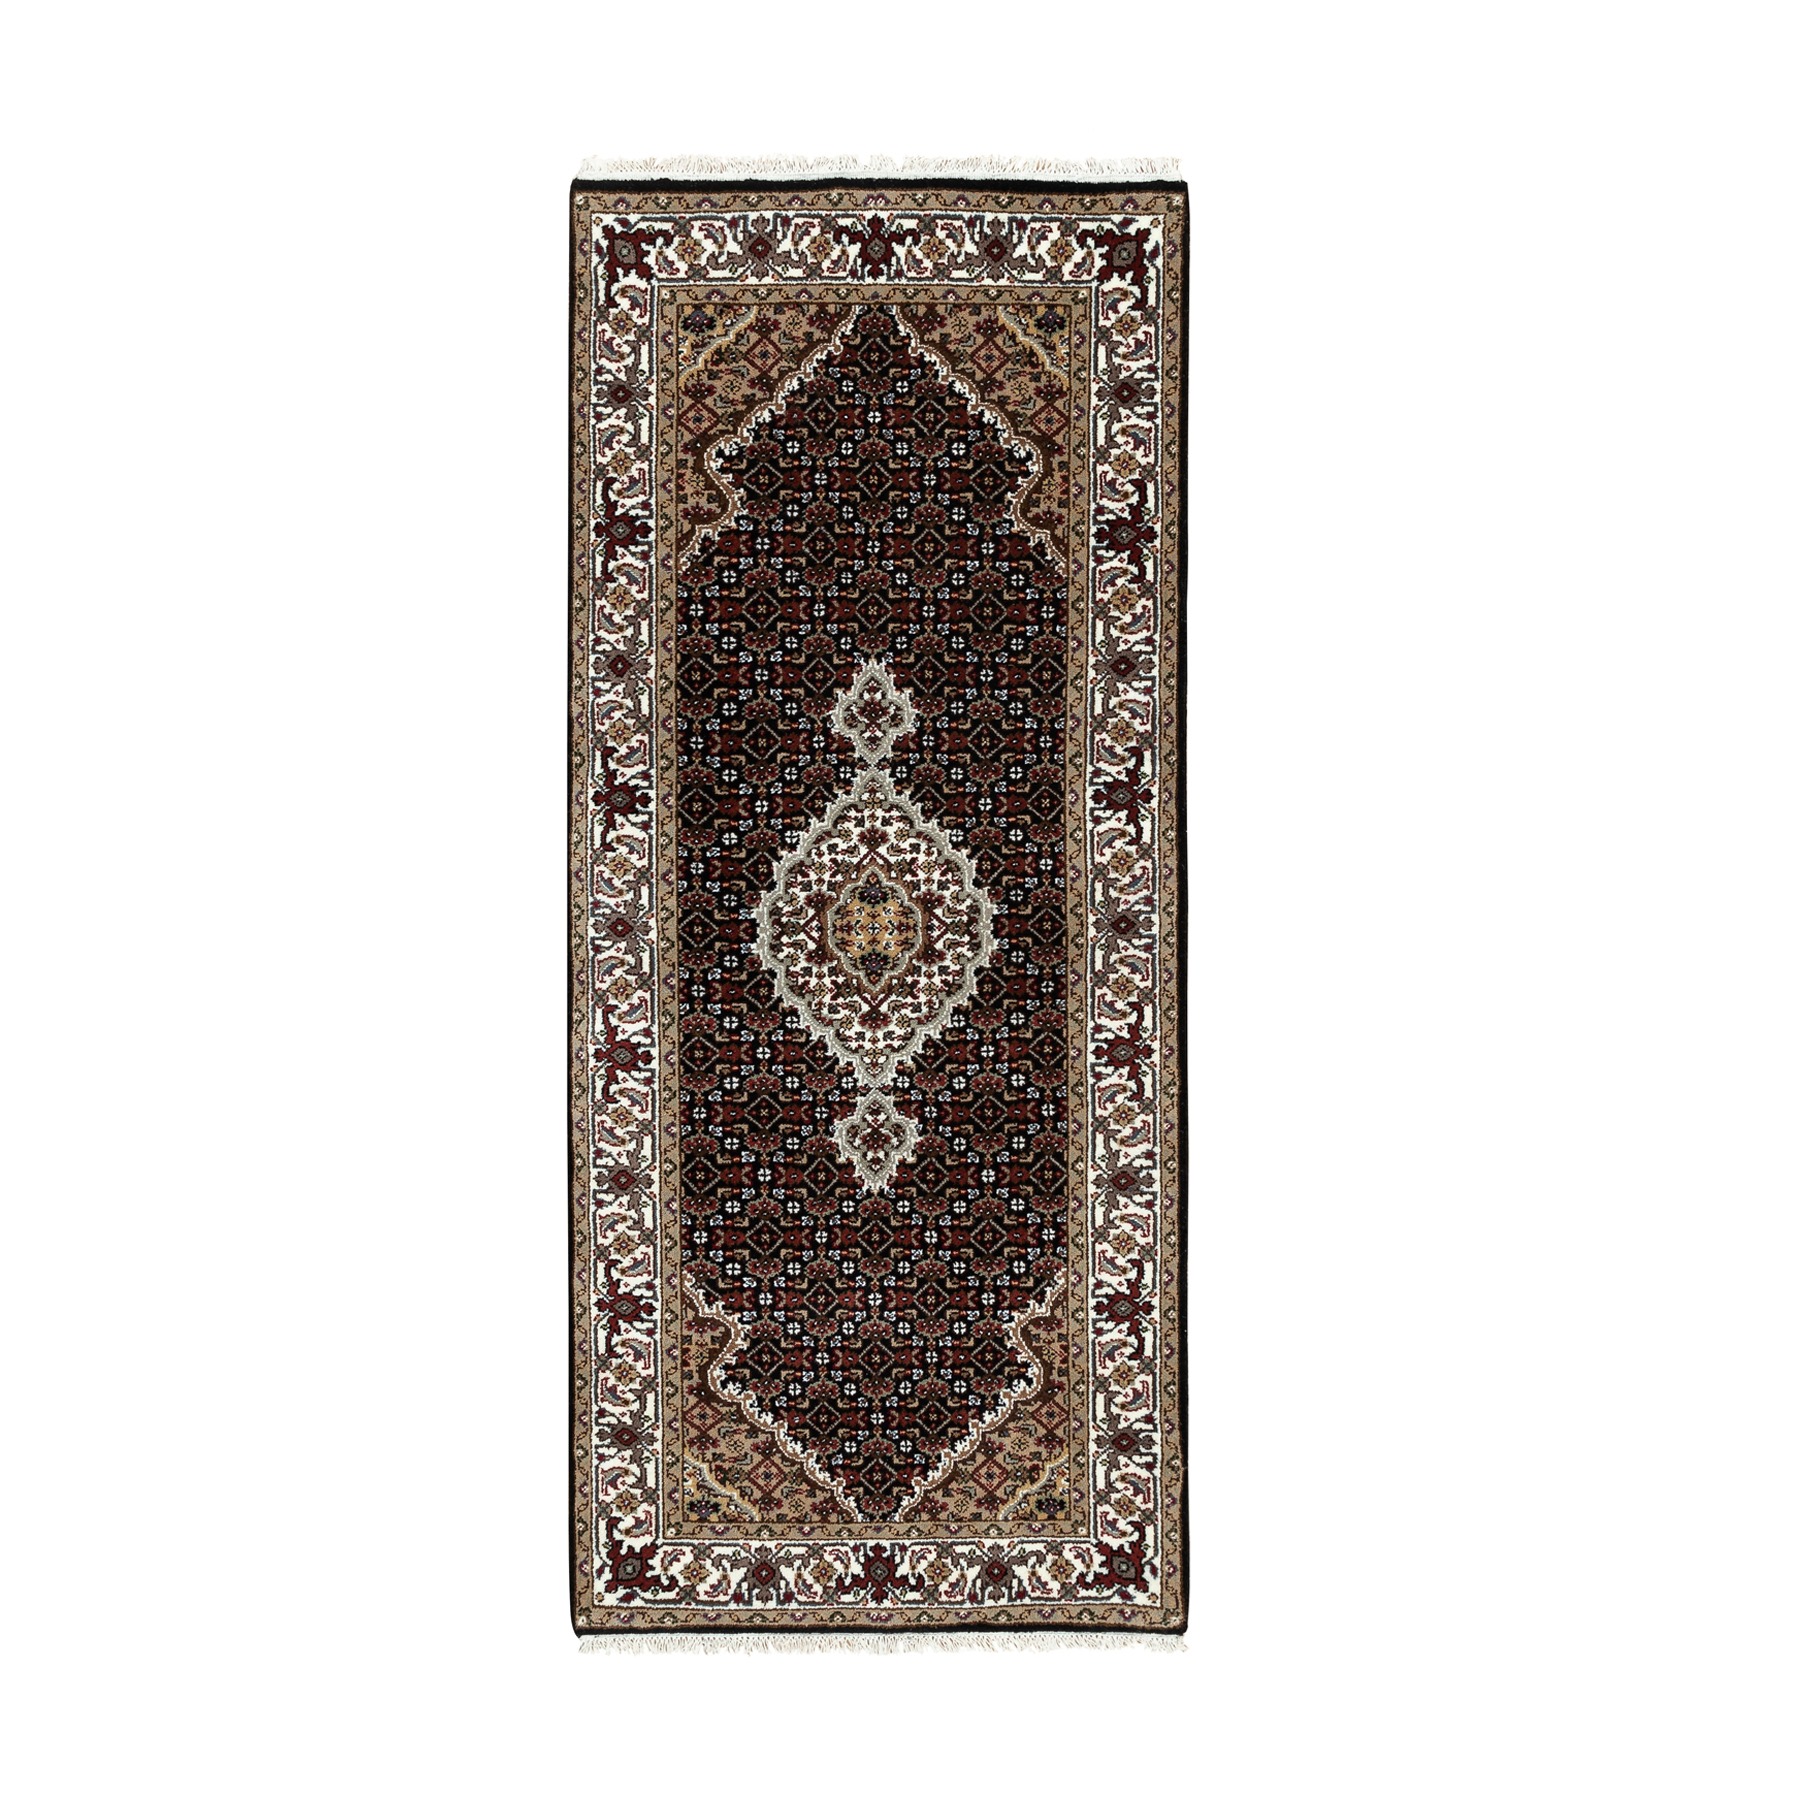 2'6"x6' Rich Black, Tabriz Mahi with Fish Medallion Design, 250 KPSI Wool and Silk Hand Woven, Runner Oriental Rug 